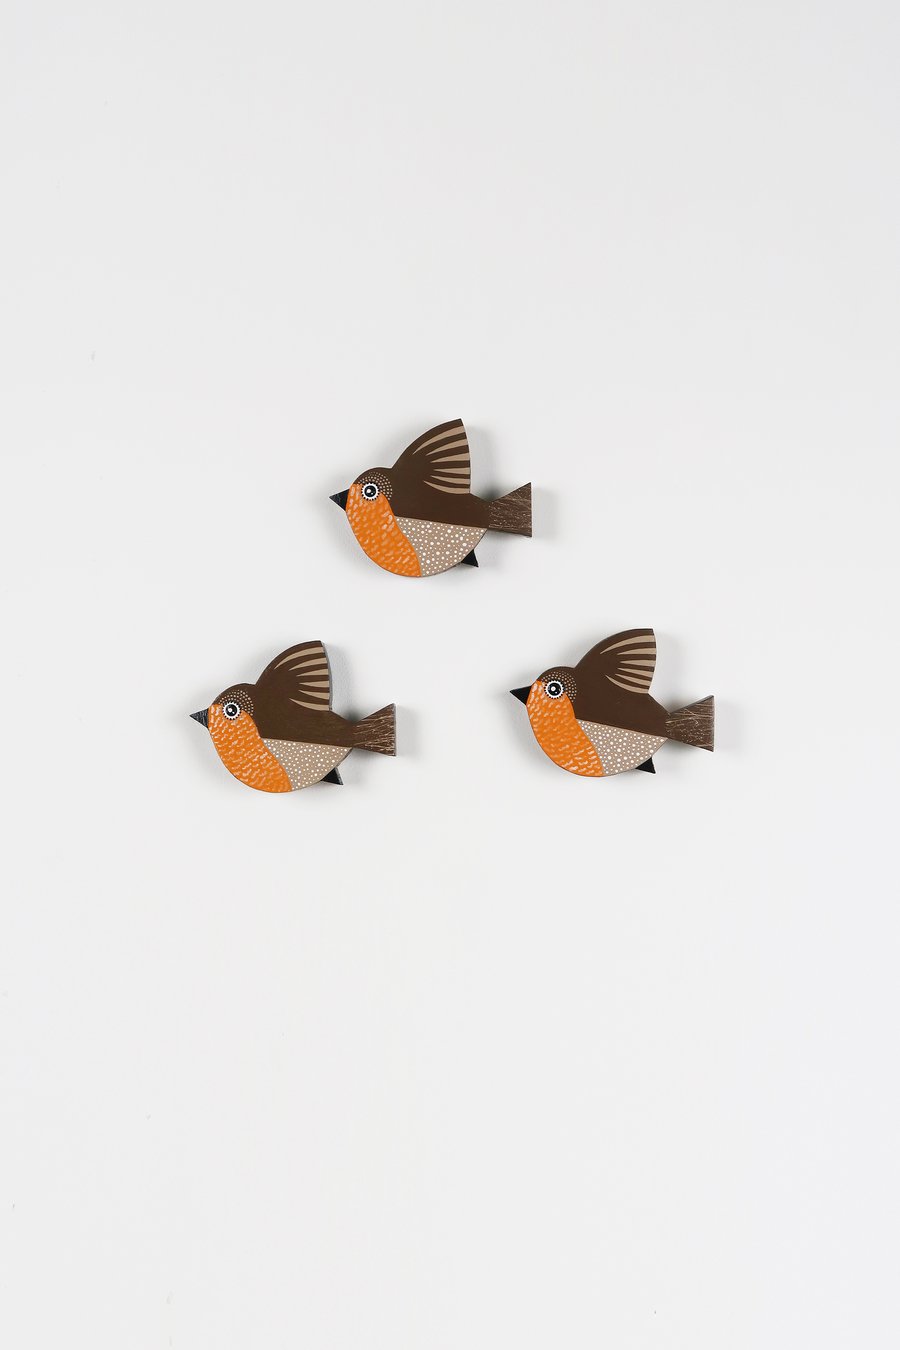 Robin bird wall decoration, set of 3 flying miniature robins, british birds art.